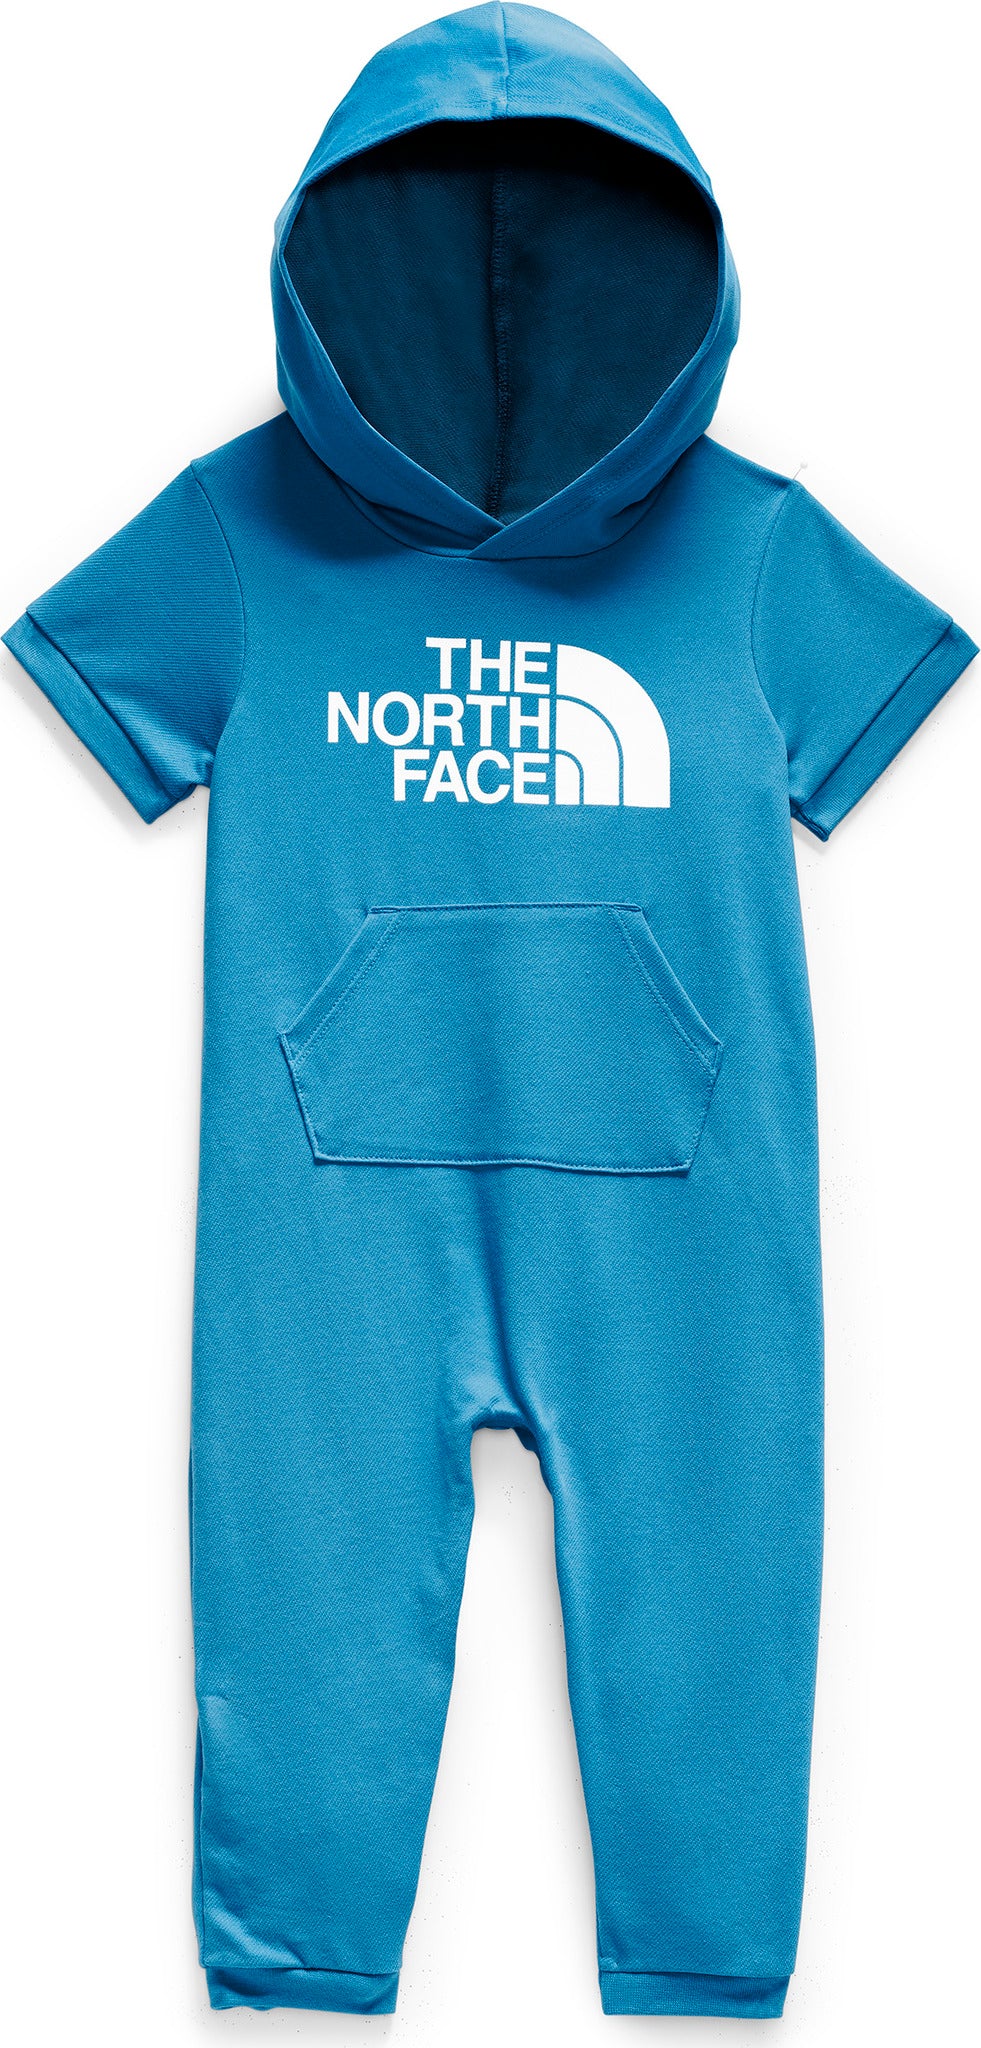 north face infant onesie